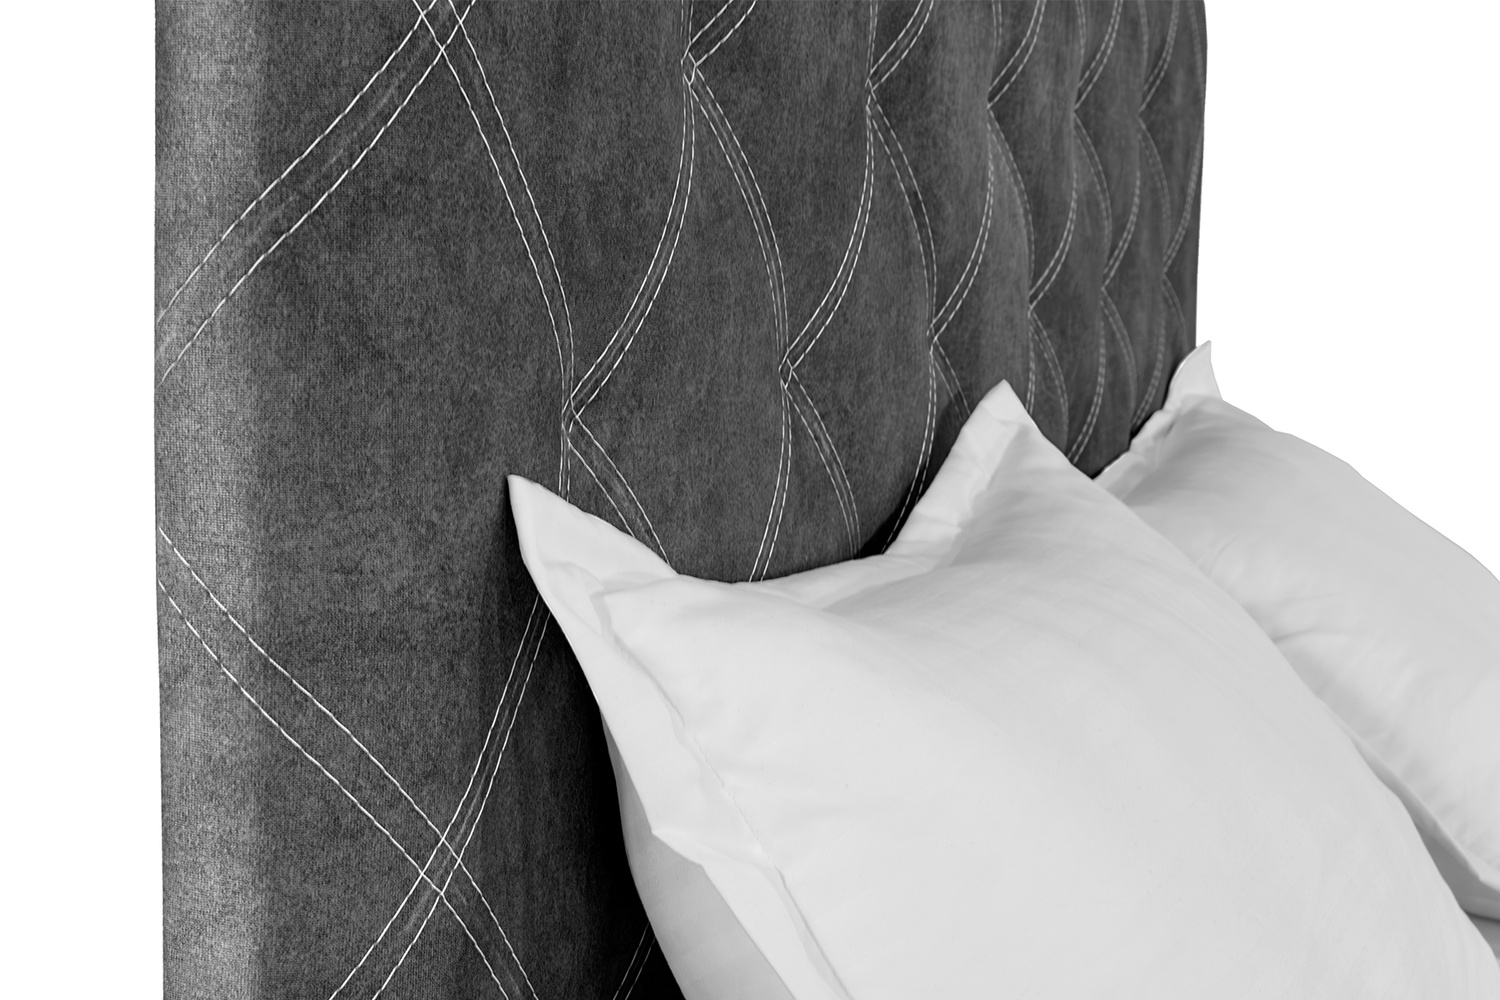 Кровать Барвинок 180х200 (Темно-серый, велюр, без подъемного механизма) IMI brvnk180x200tsb фото